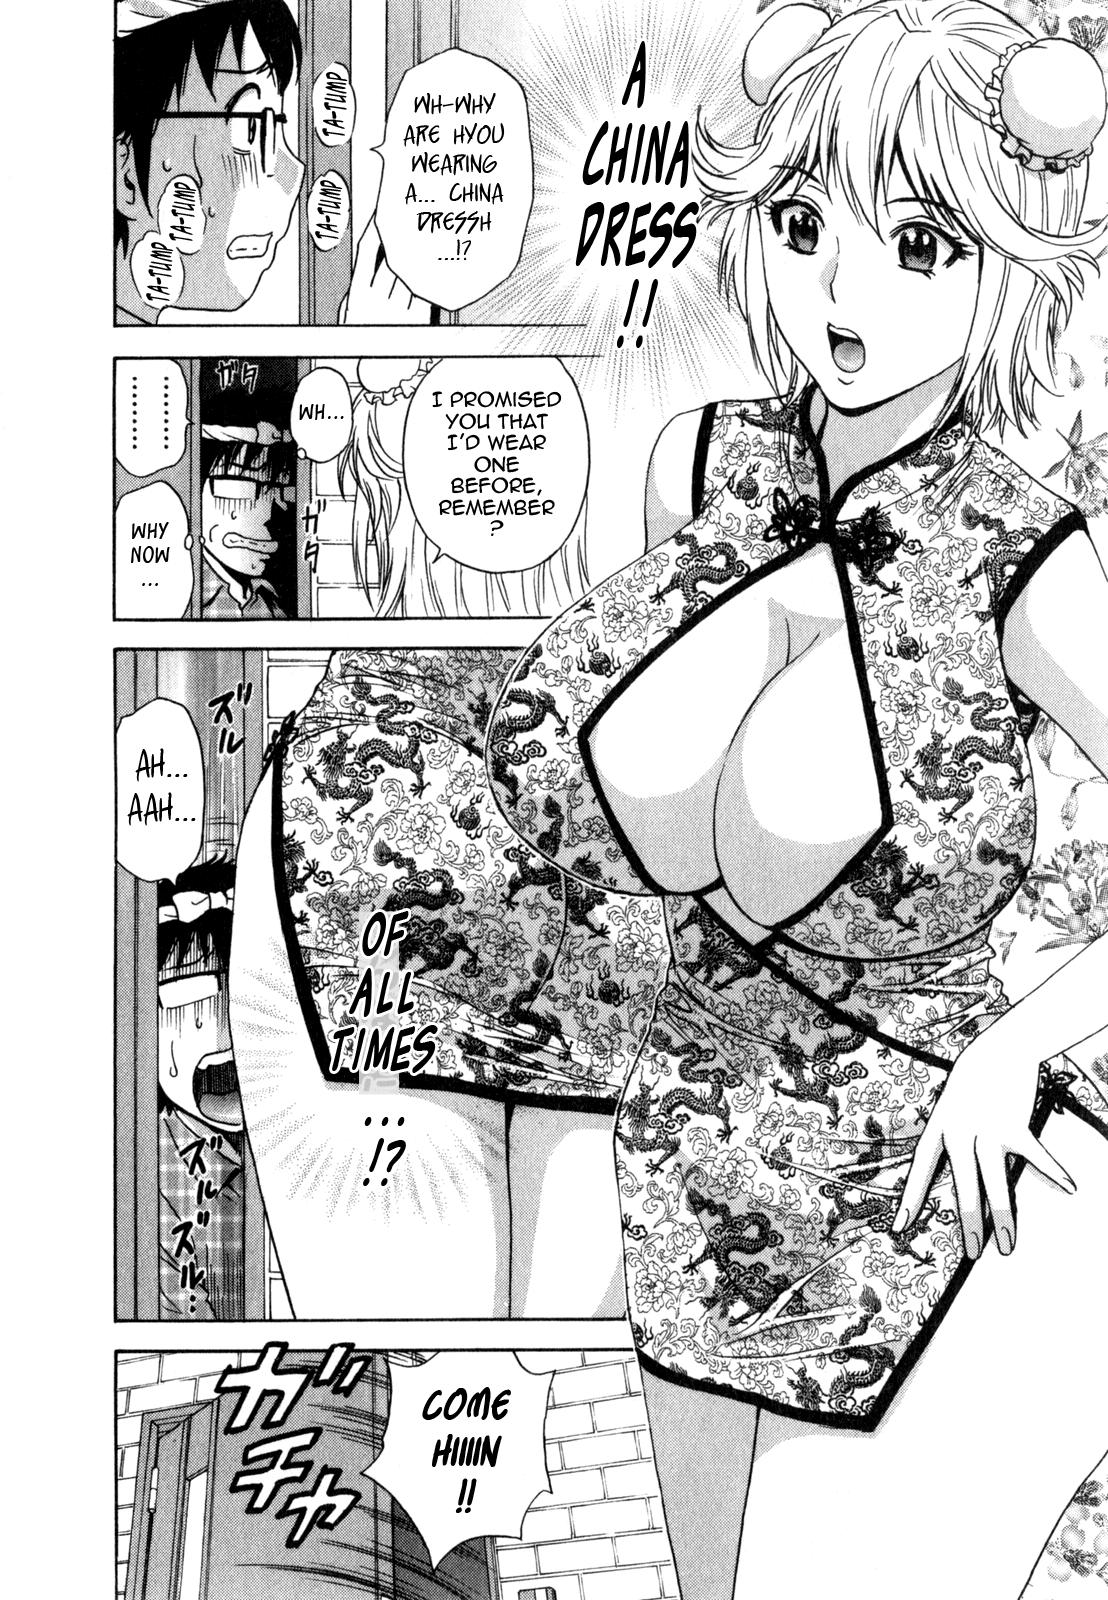 [Hidemaru] Life with Married Women Just Like a Manga 3 - Ch. 1-7 [English] {Tadanohito} 114